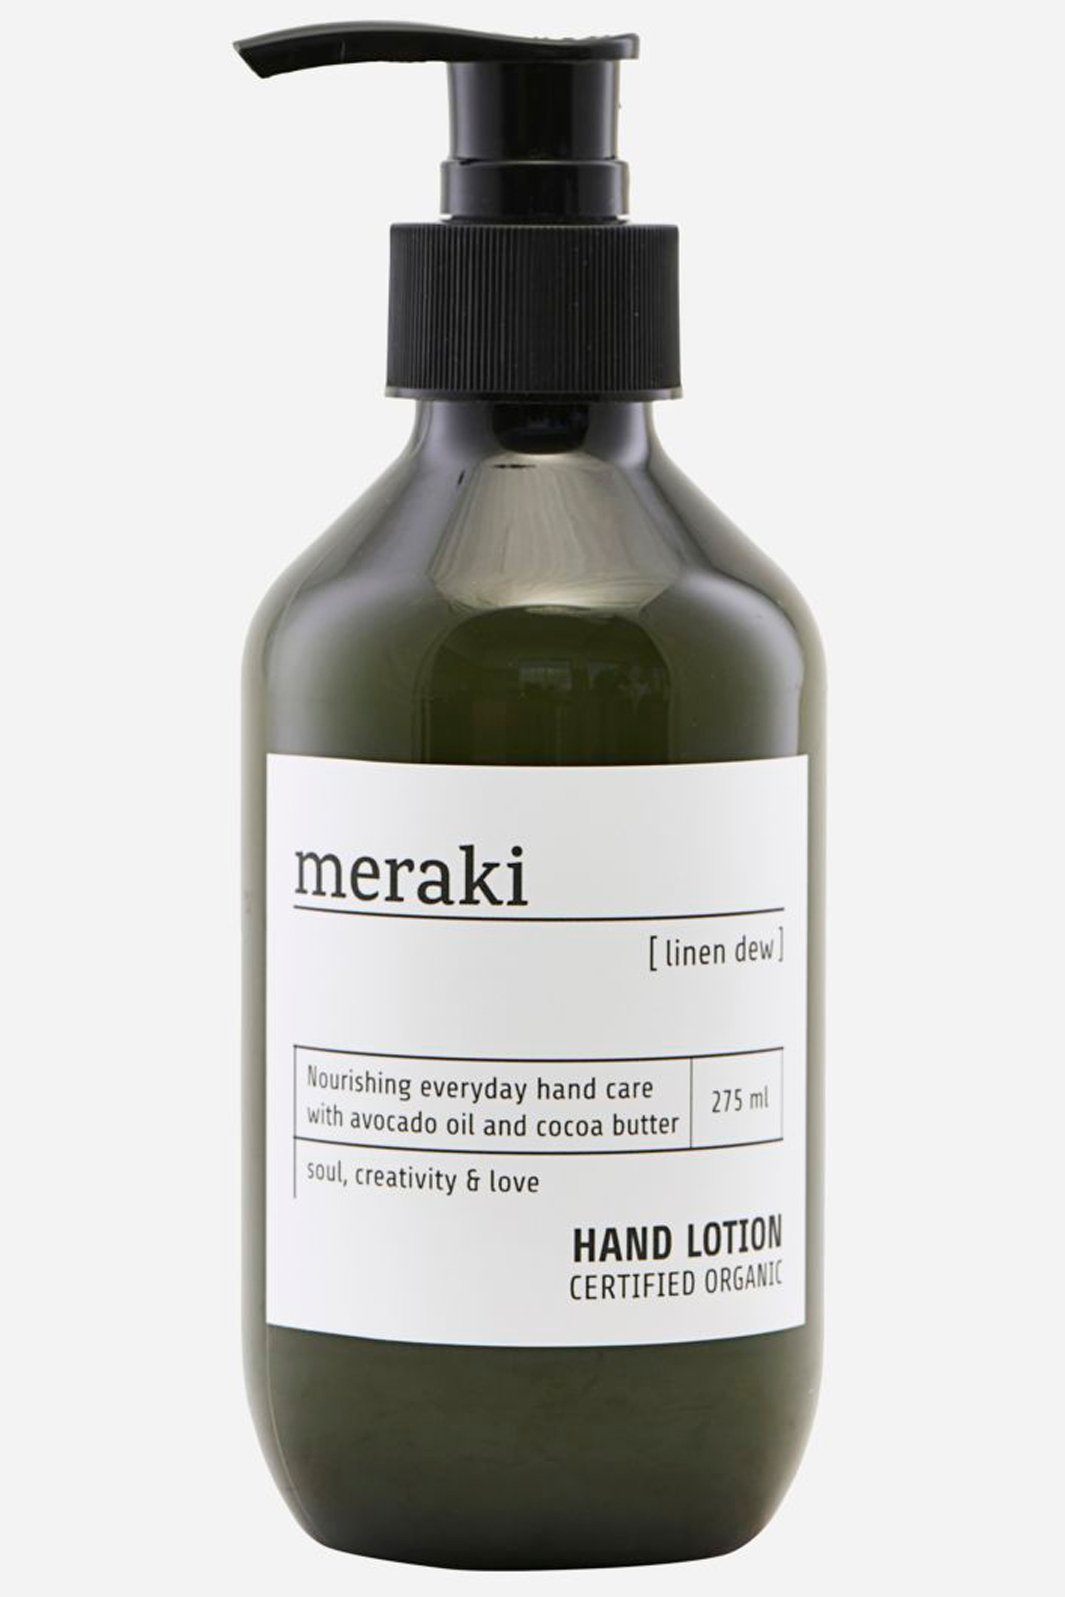 Meraki - Hand Lotion - Line Drew - 275 ml Creme 